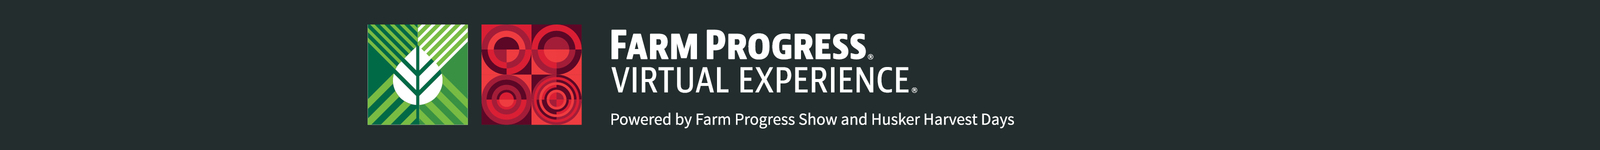 Farm Progress Virtual Experience 2020 logo